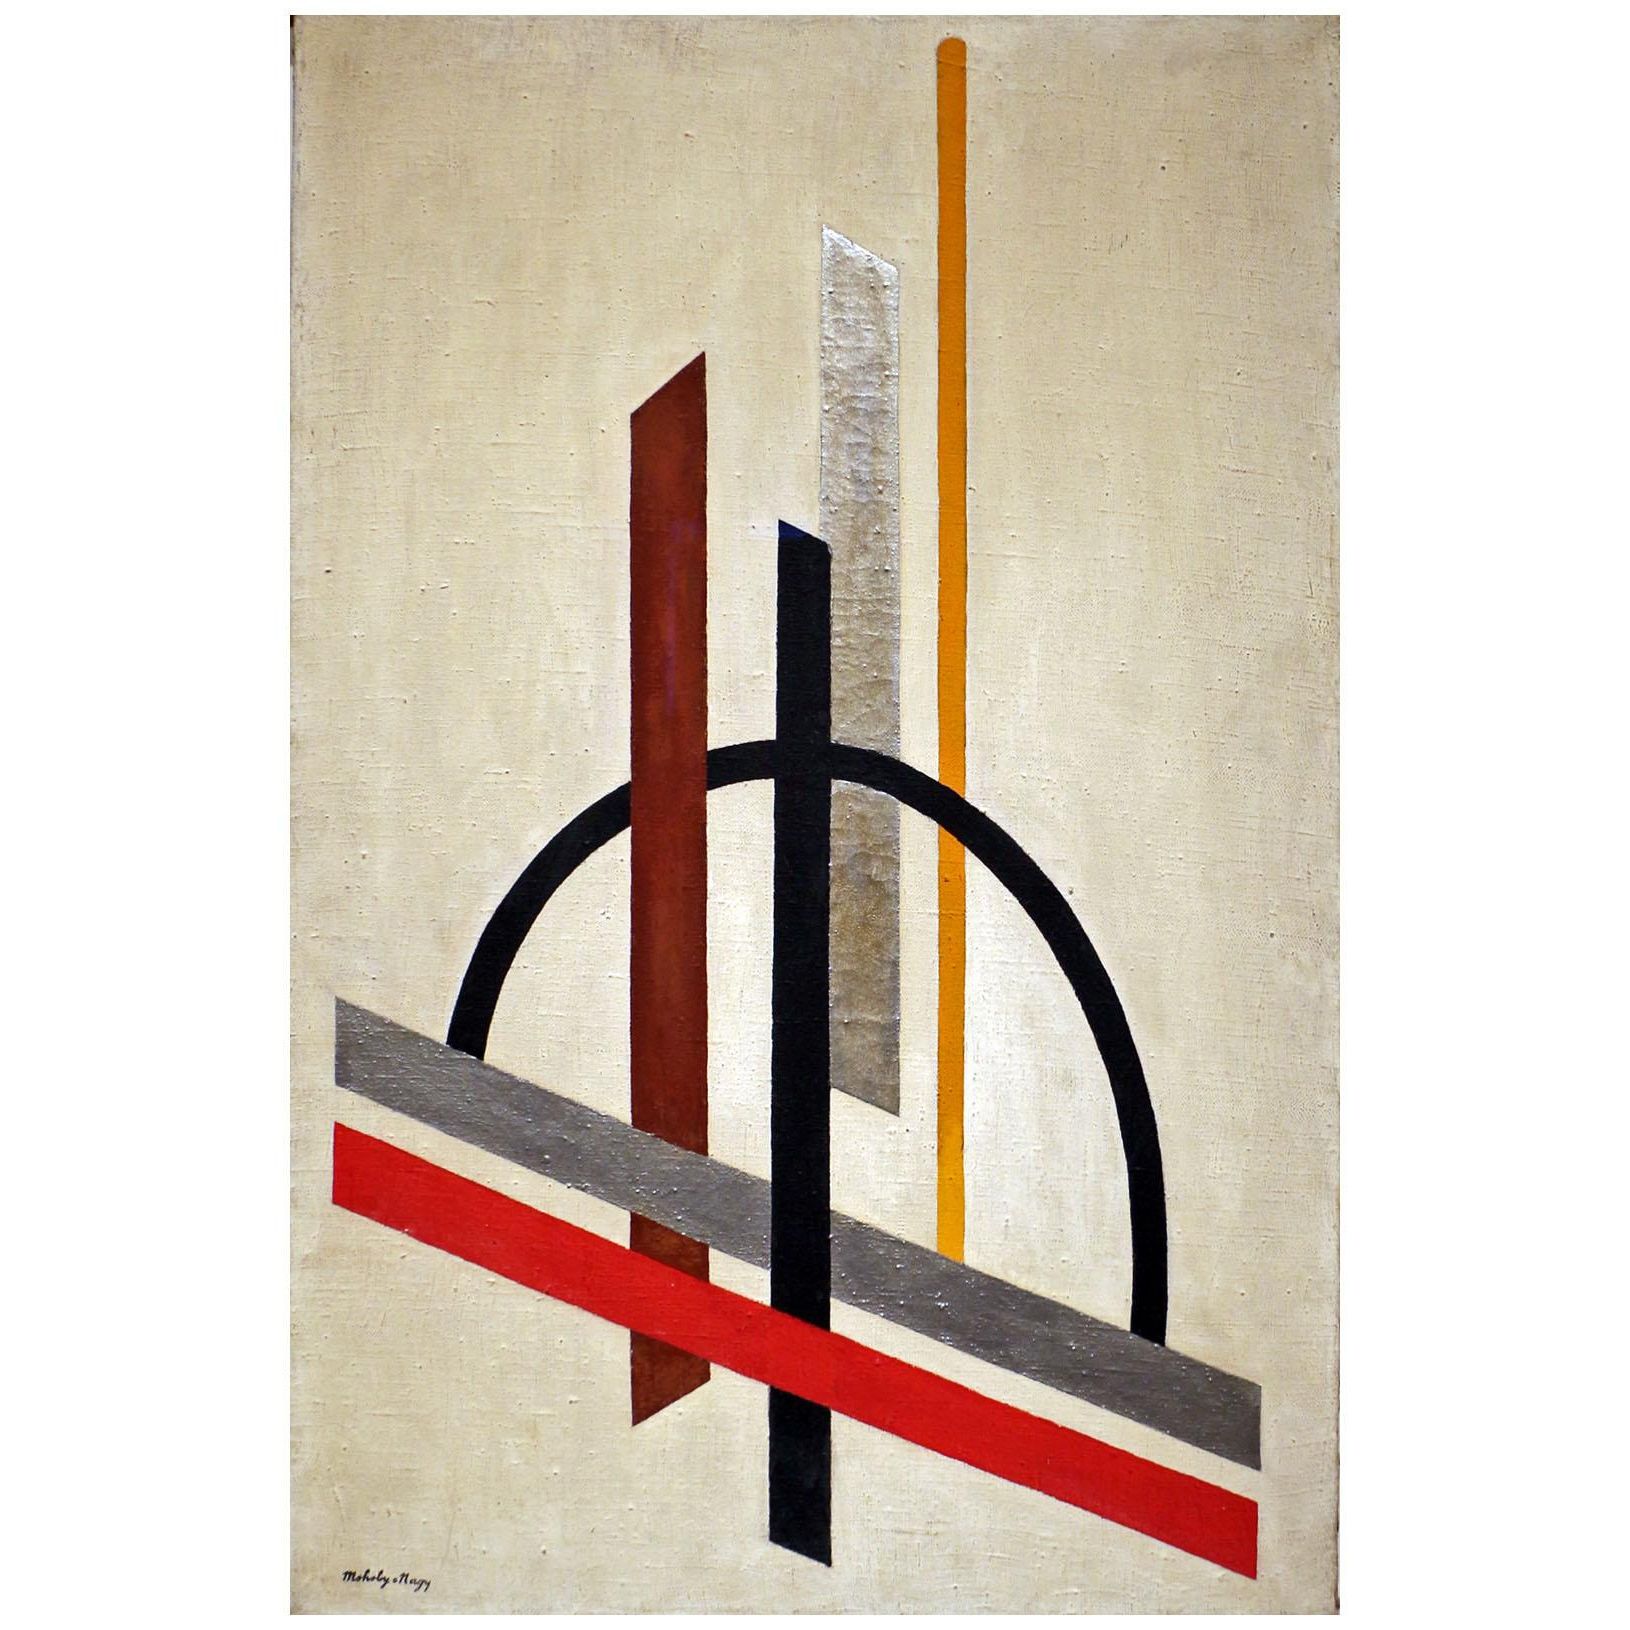 Laszlo Moholy-Nagy. Eccentric Architecture. 1921. Guggenheim Museum NY